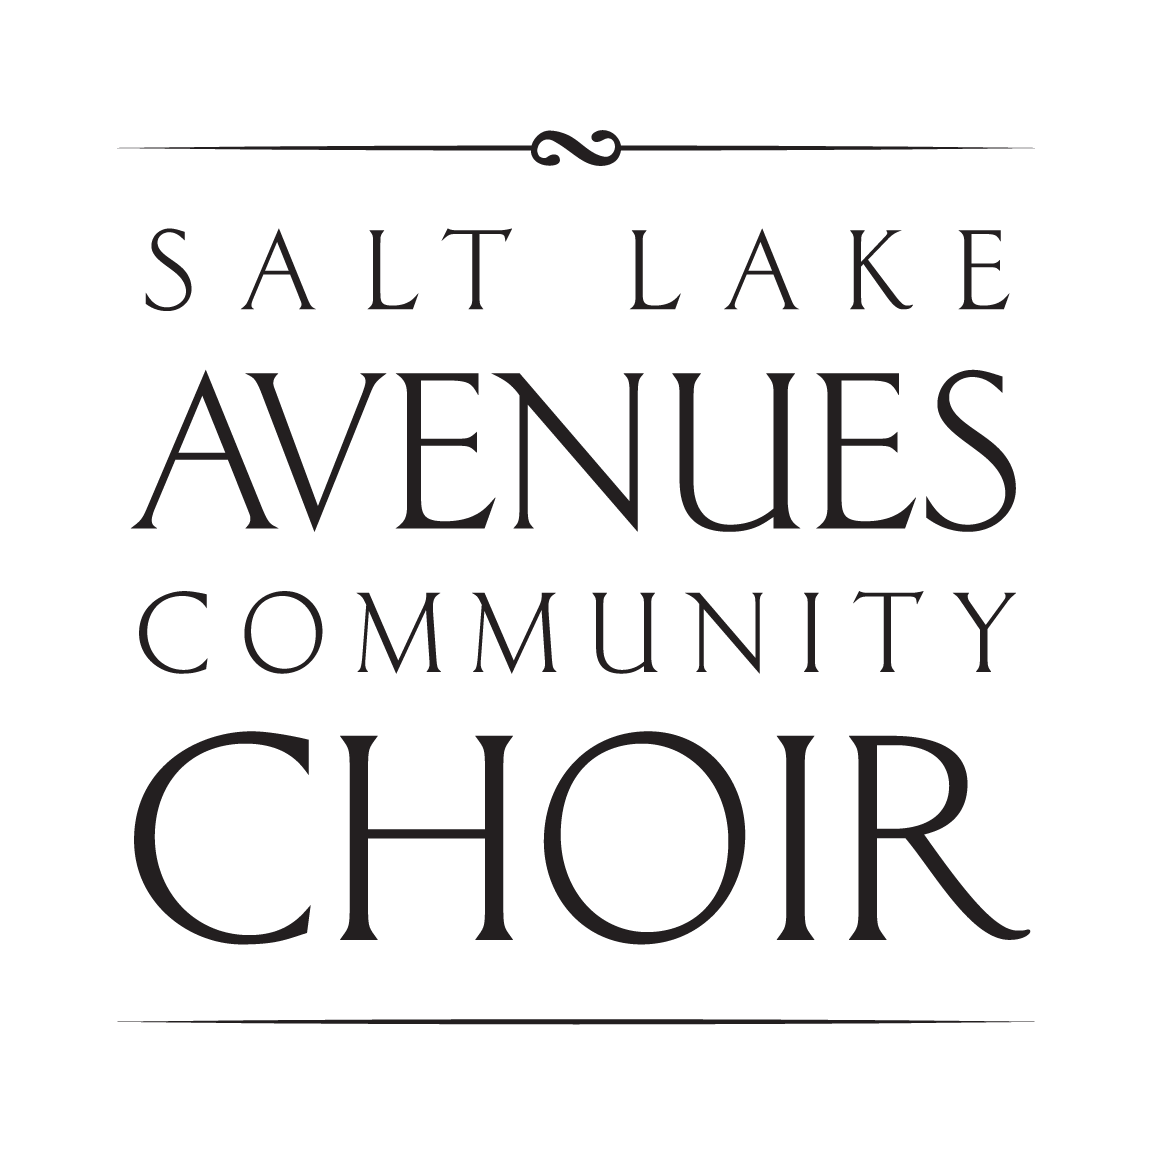 Salt Lake Avenues Community Choir